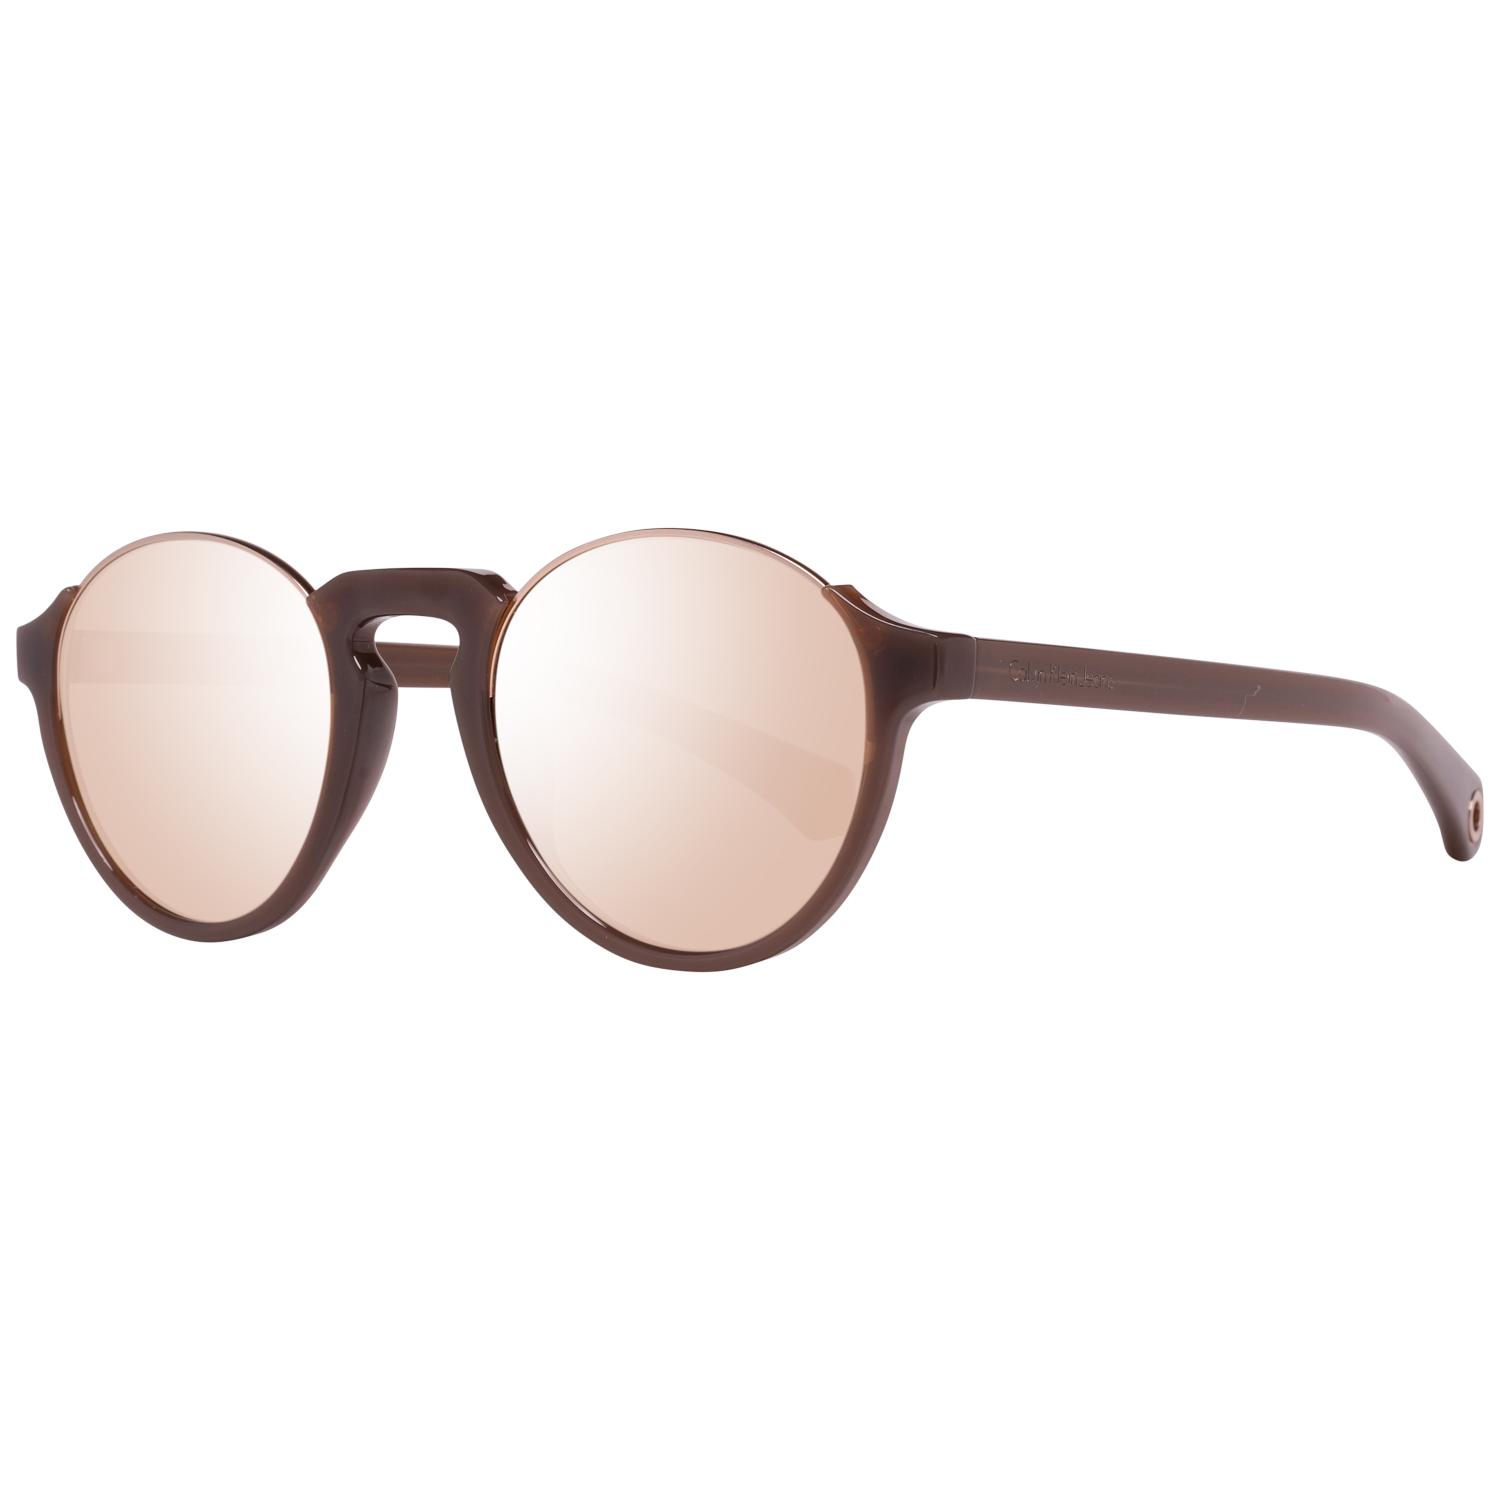 Calvin Klein Sunglasses CKJ794S 209 48